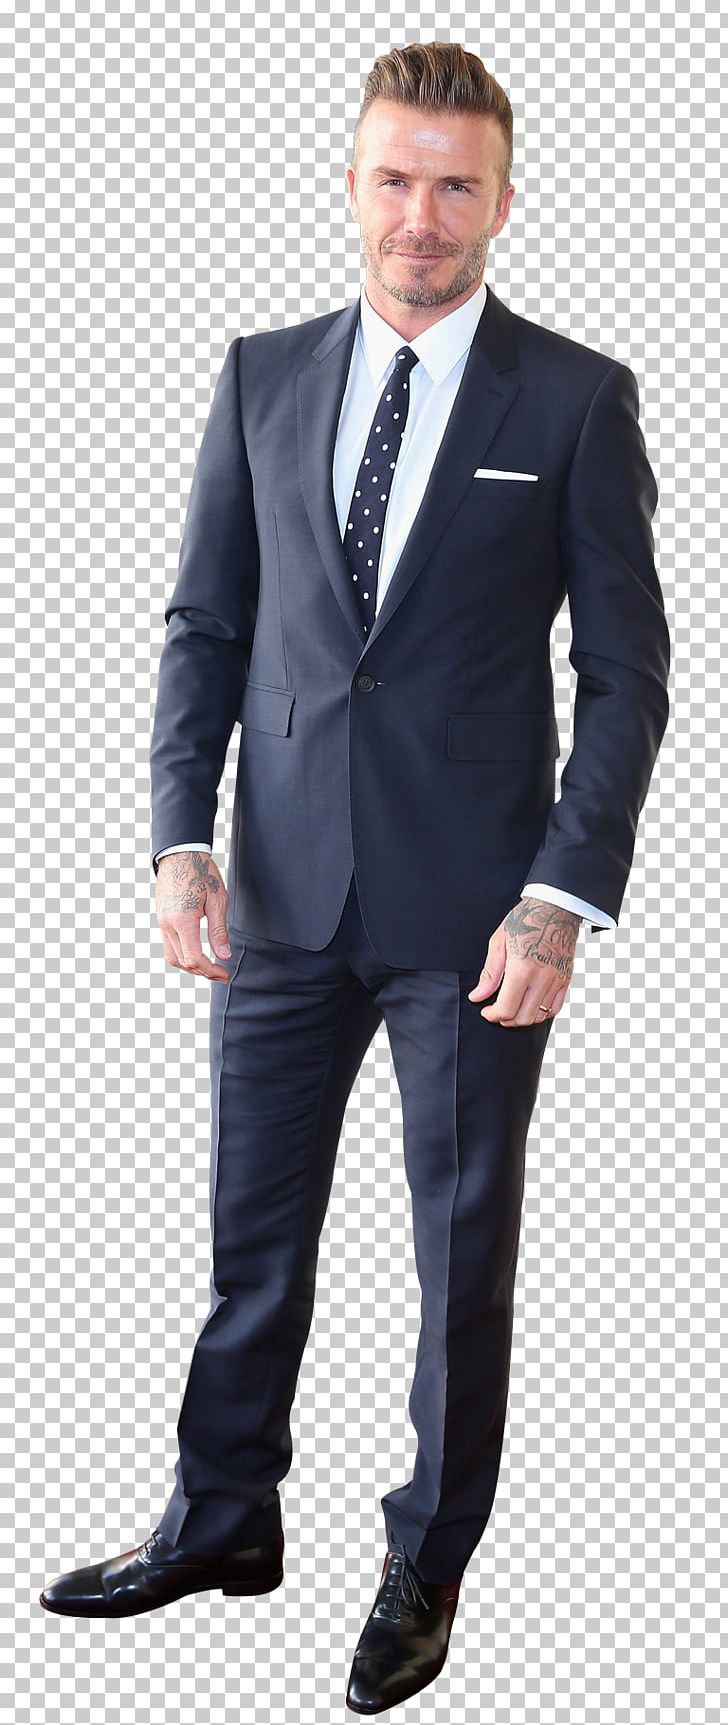 David Beckham Allied Suit Tuxedo PNG, Clipart, Actor, Blazer, Blue, Brad Pitt, Business Free PNG Download